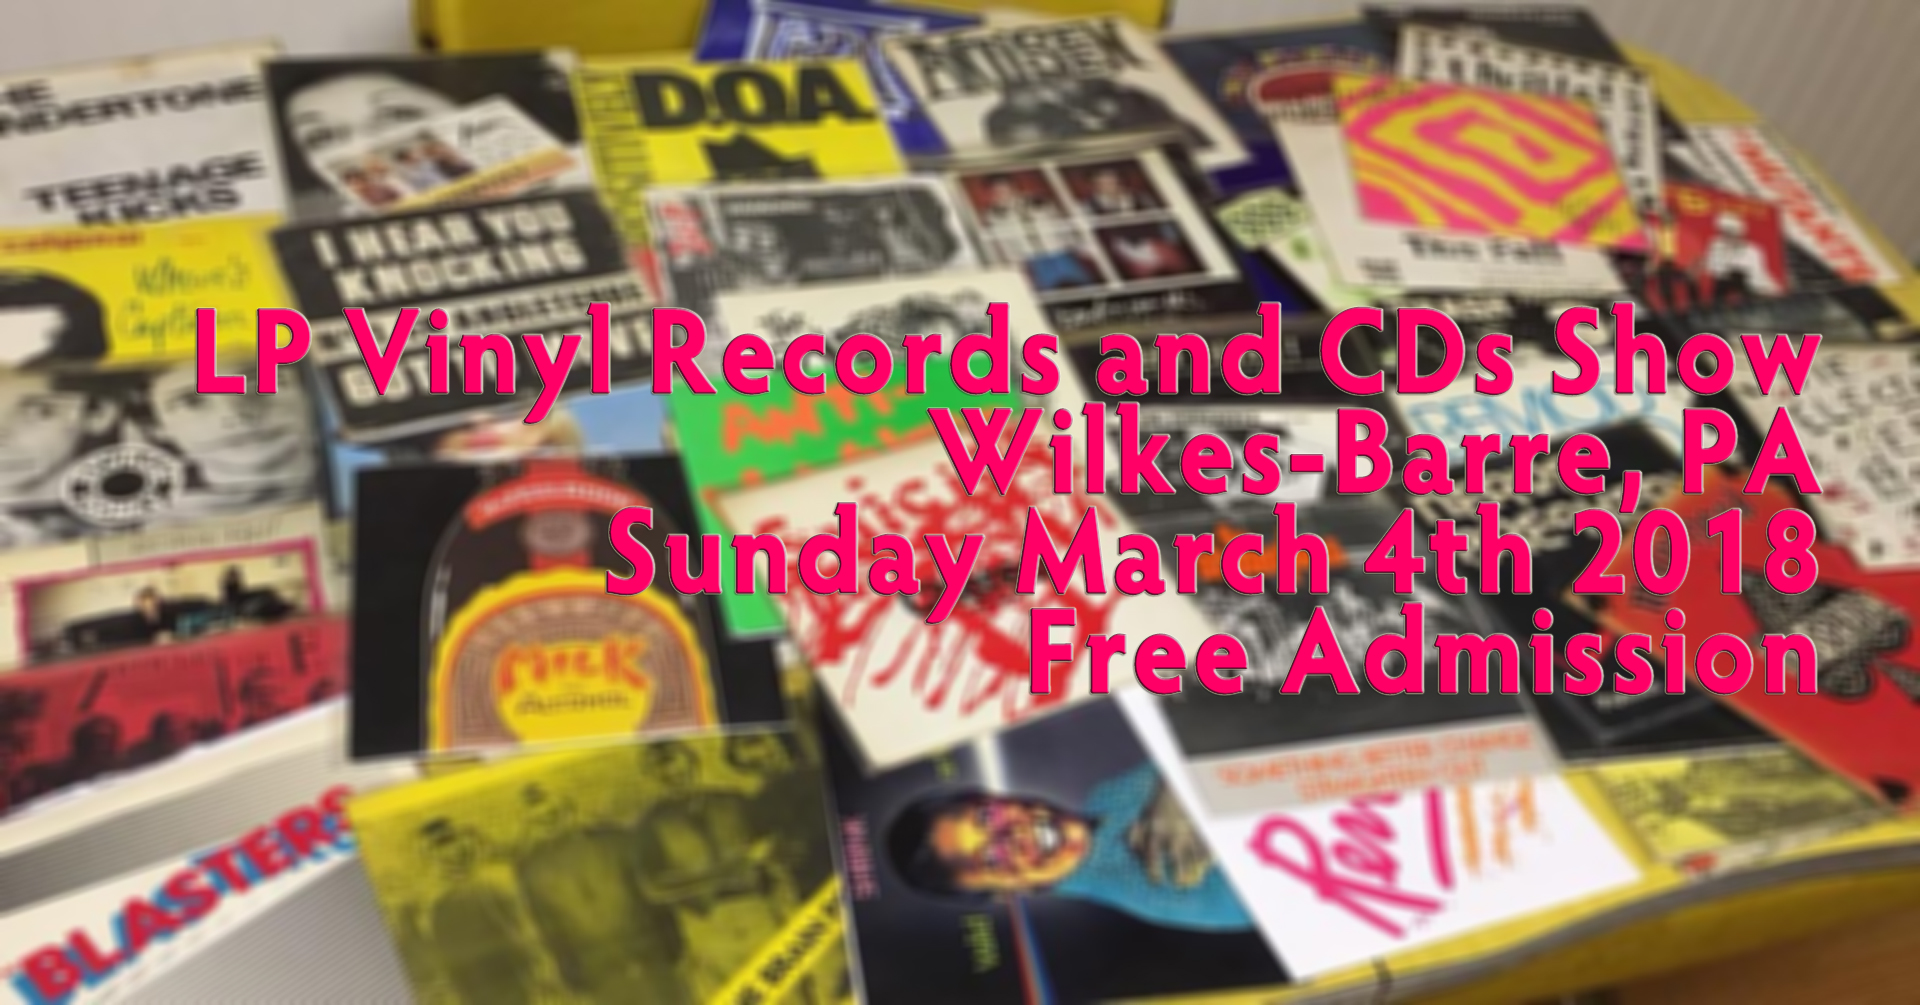 NEPA – Scranton / Wilkes-Barre LP Vinyl Records & CDs Show – Sunday March 4th 2018 – Free Admission